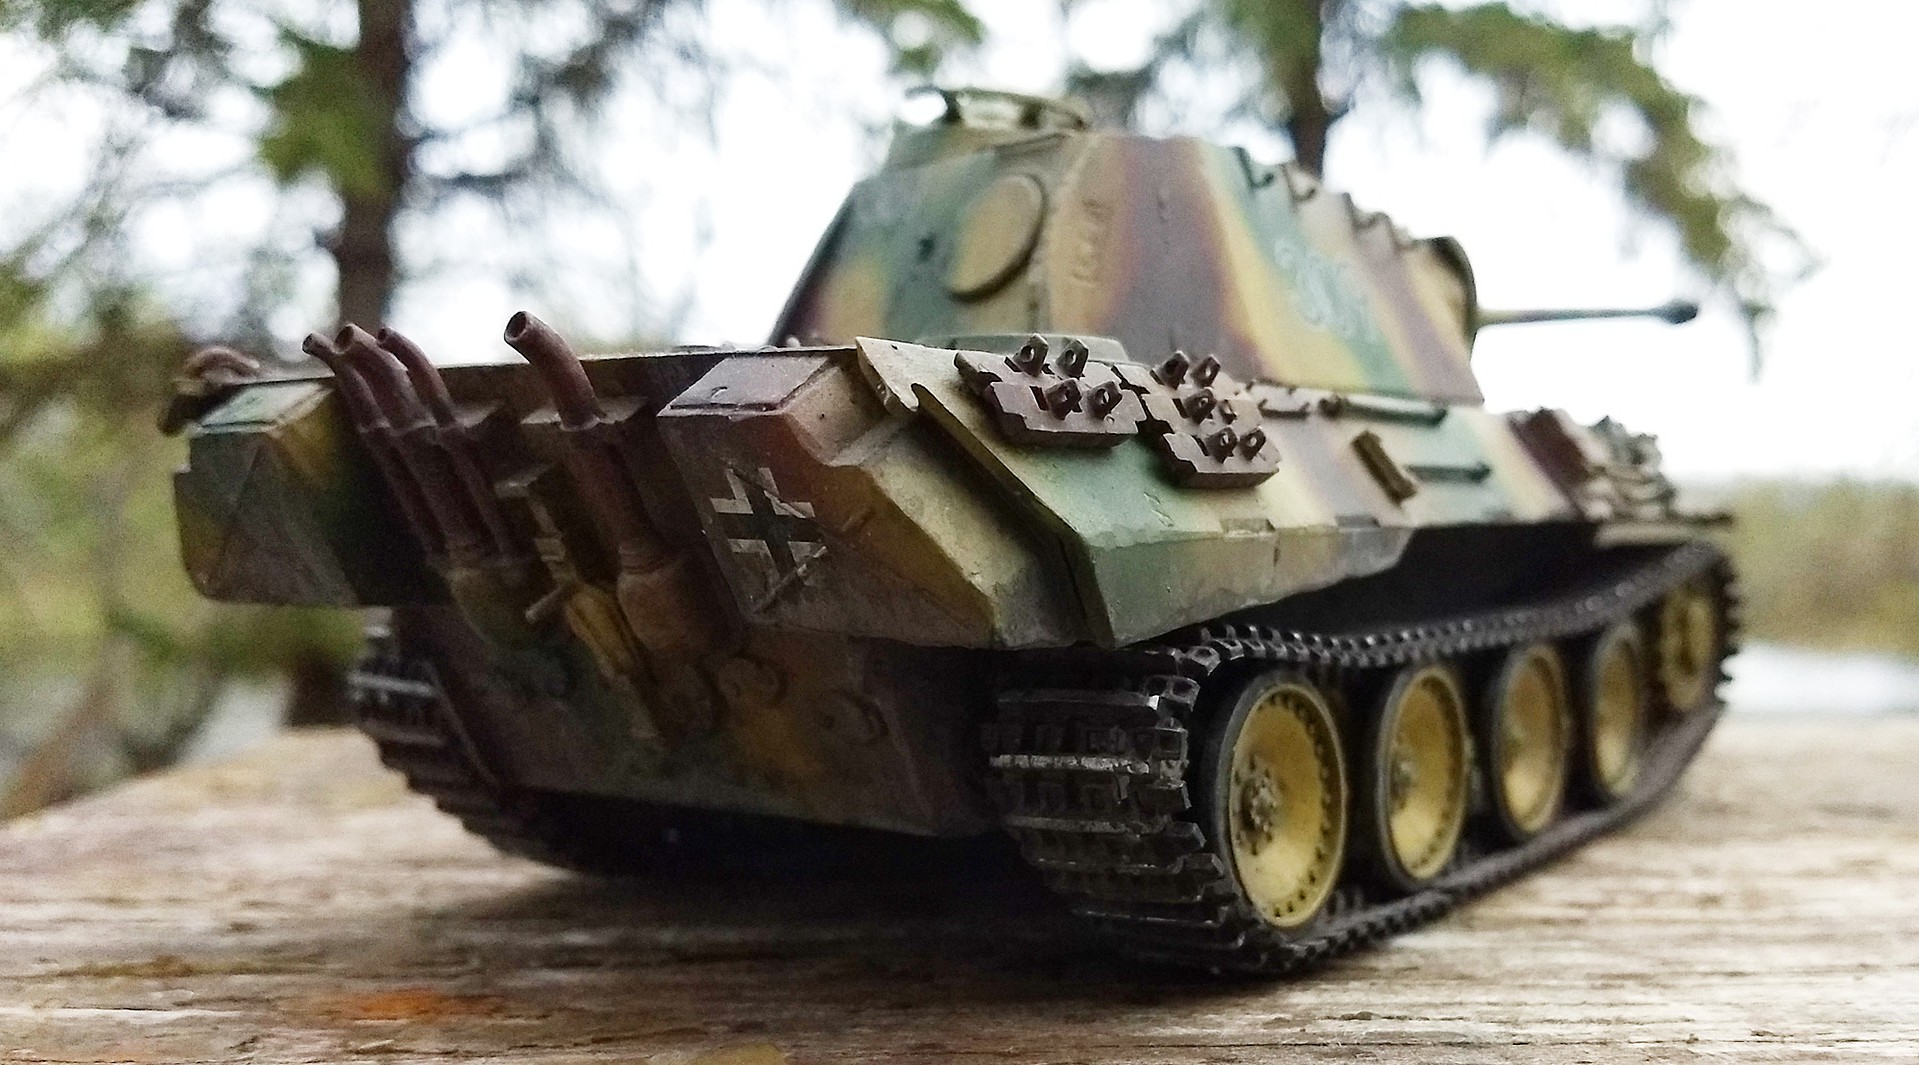 German Panther Medium Tank Plastic Model Military Vehicle Kit 1